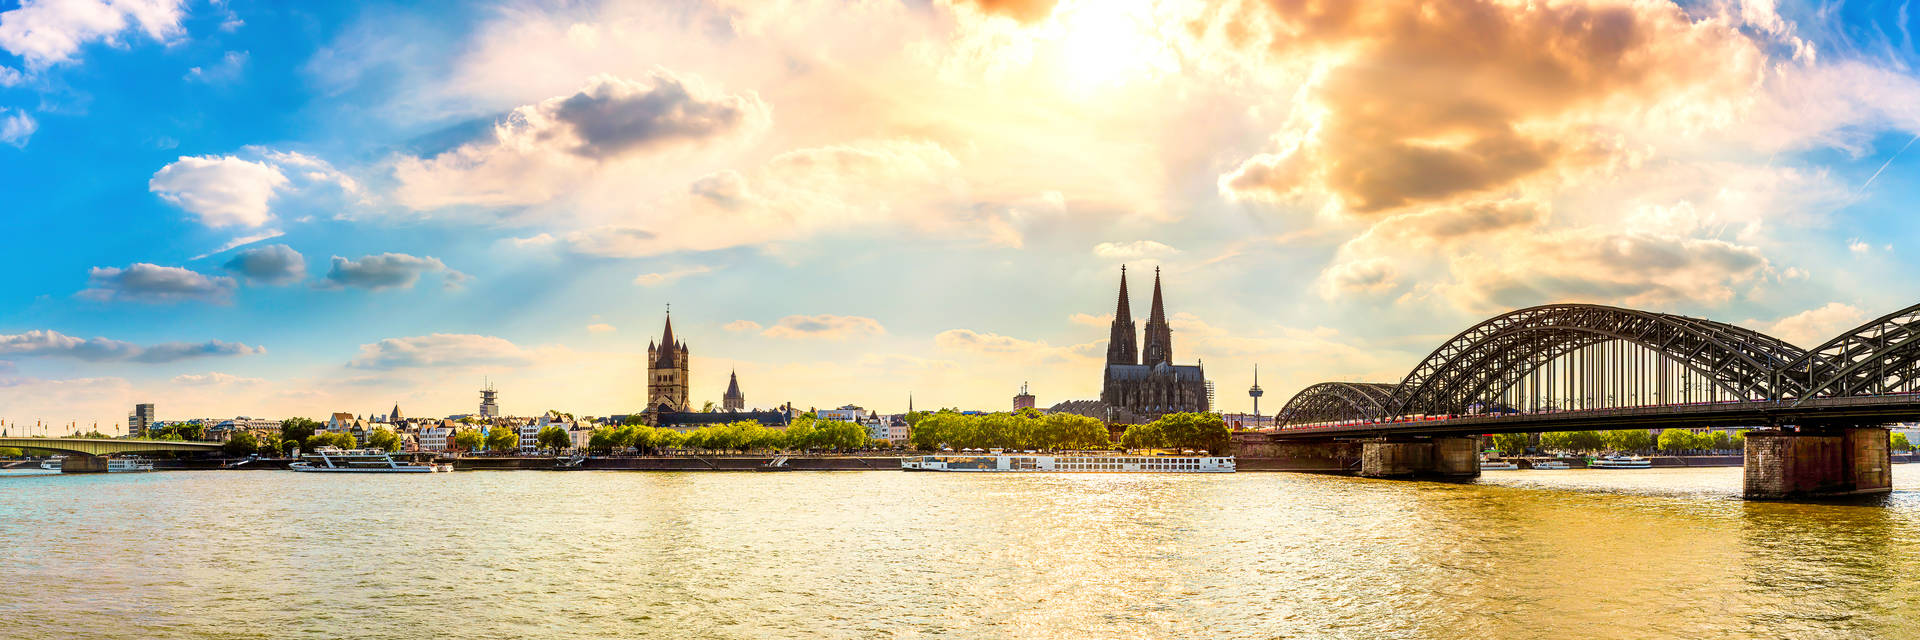 Skyline Cologne - H-Hotels in Cologne - Official website